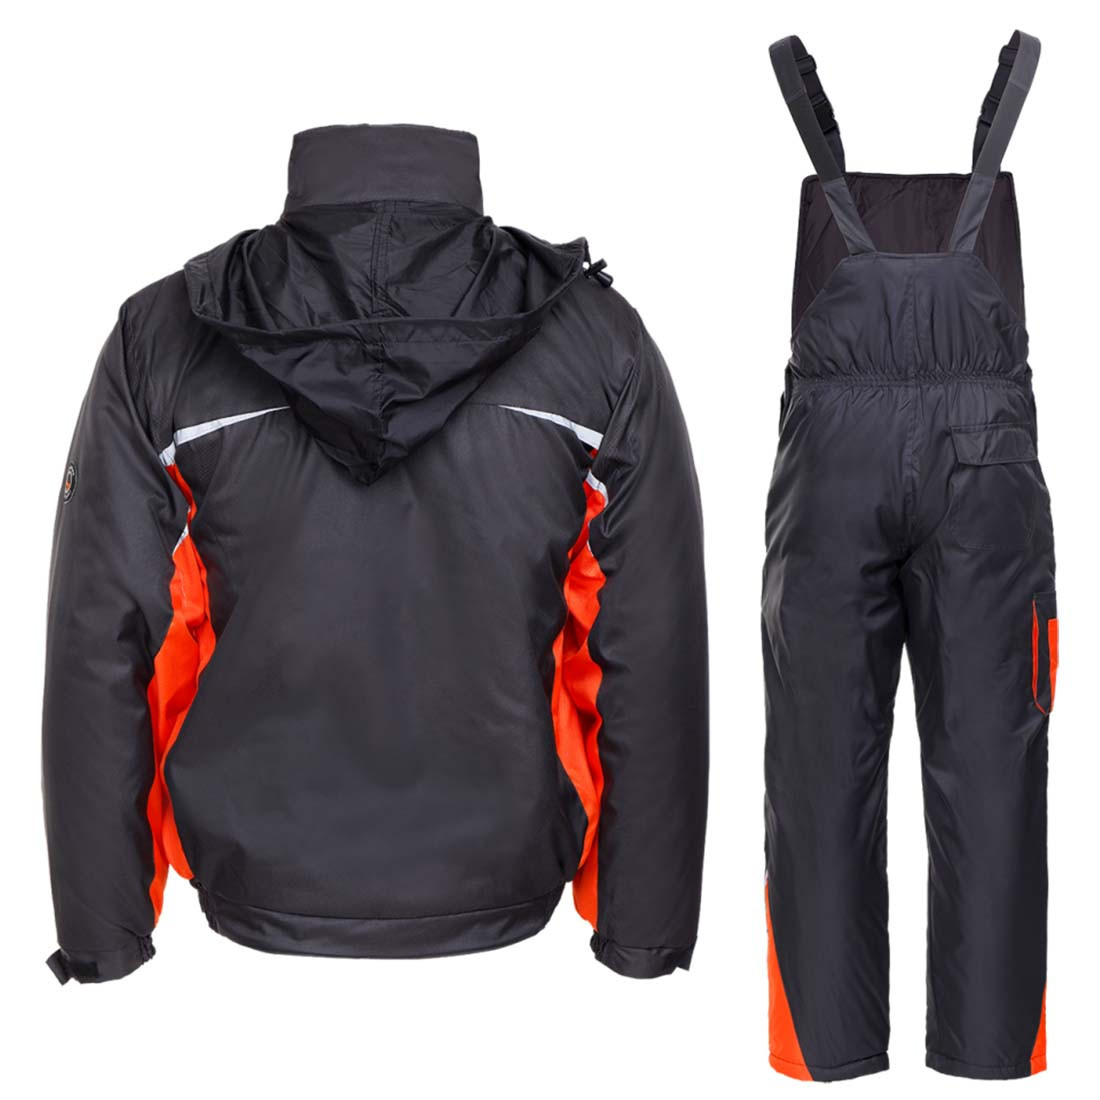 Kastor Winter Suit - Safetywear